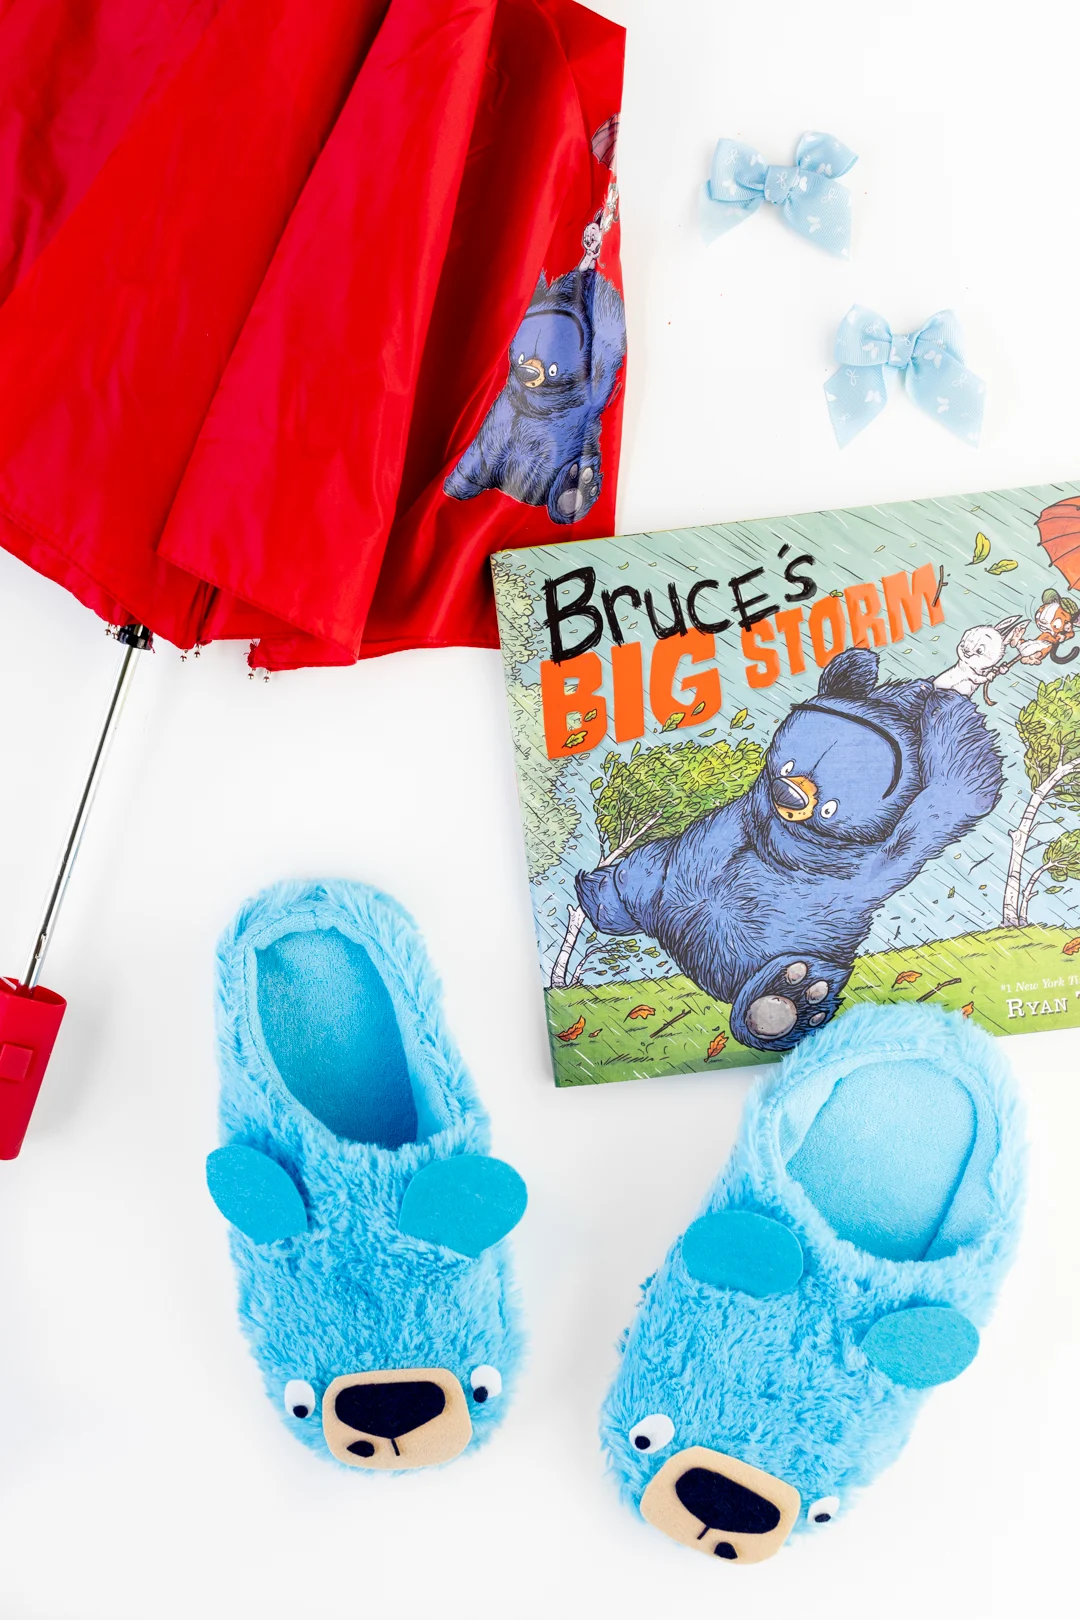 Bruce's Big Storm Book with Cute Bruce Umbrella and Bruce Slippers!